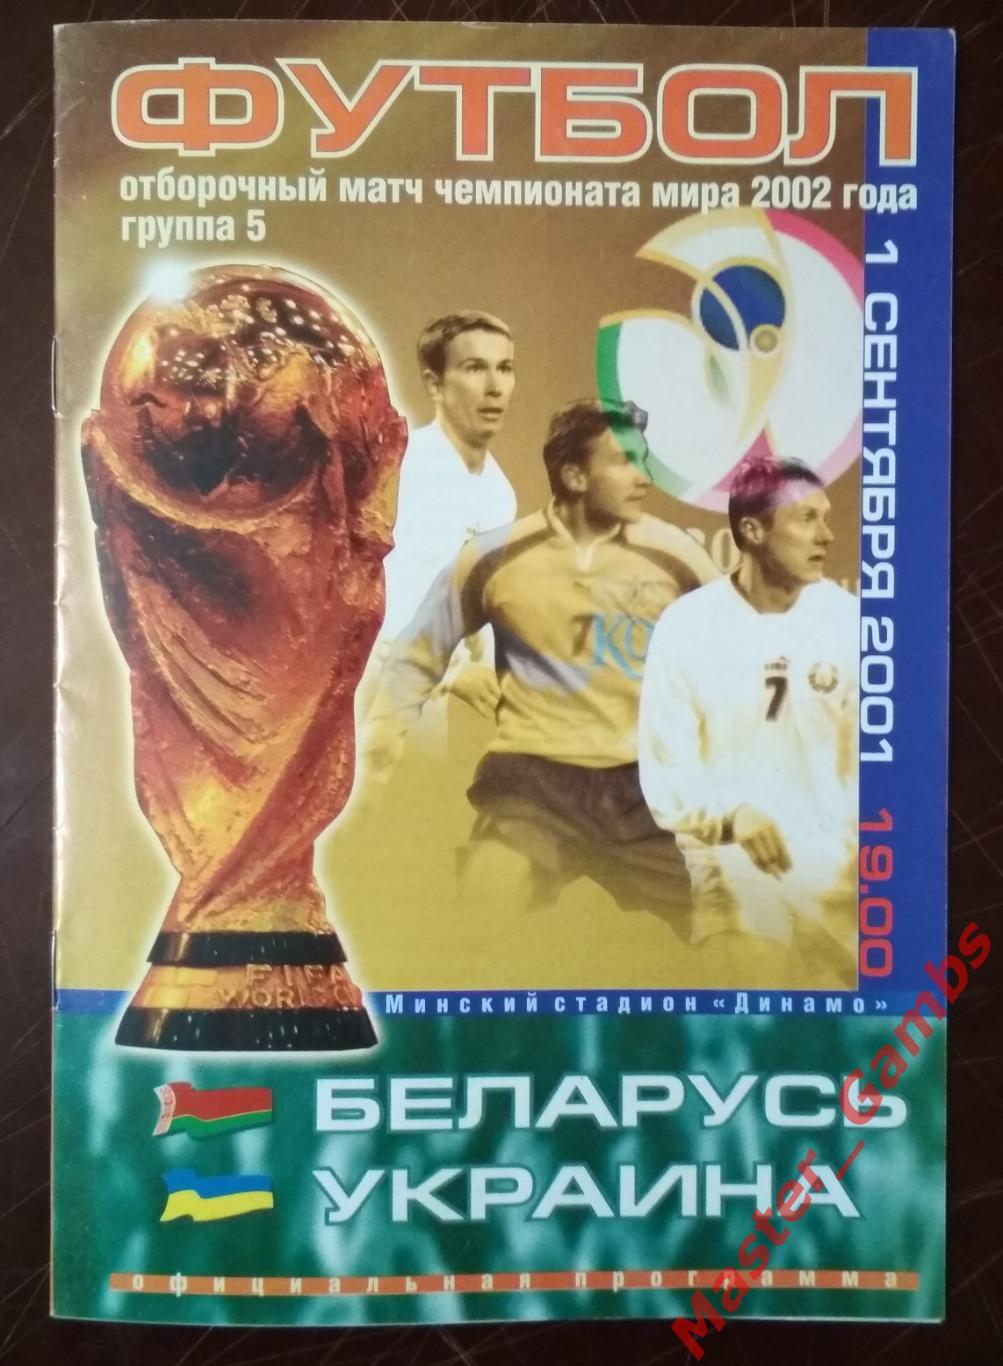 беларусь - Украина 2001